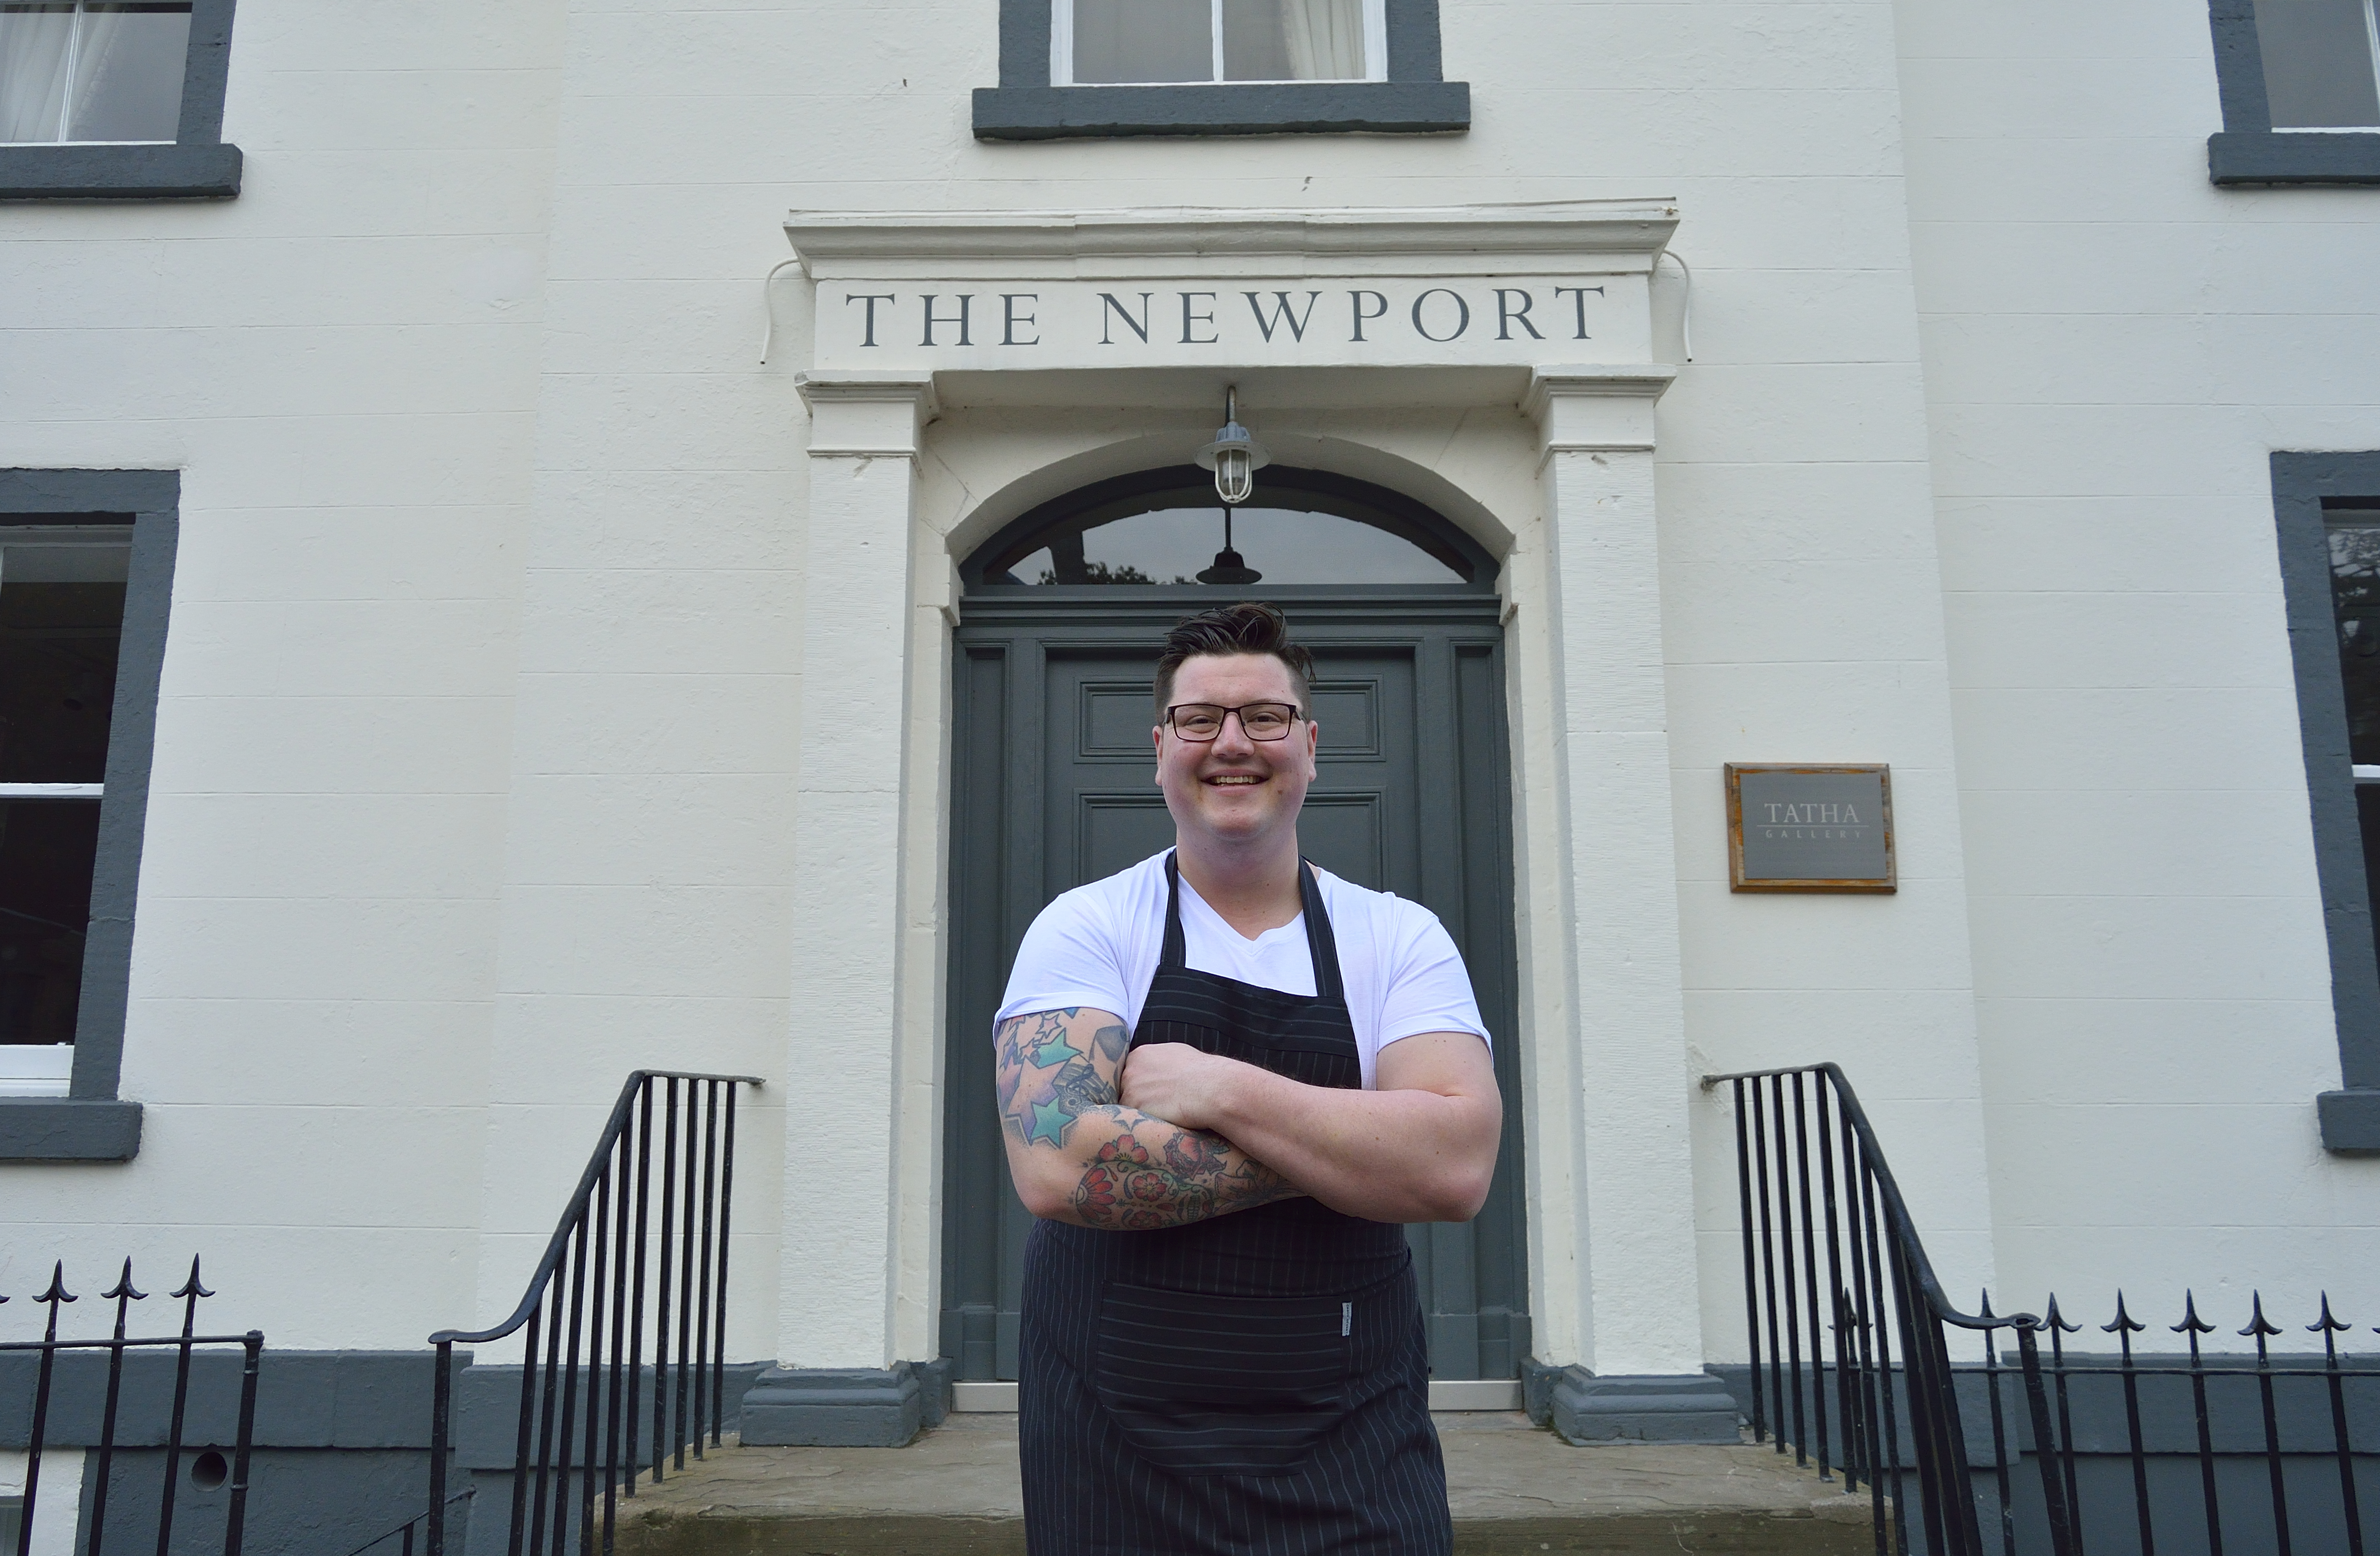 Jamie Scott opened The Newport following his Masterchef: The Professionals triumph in 2014